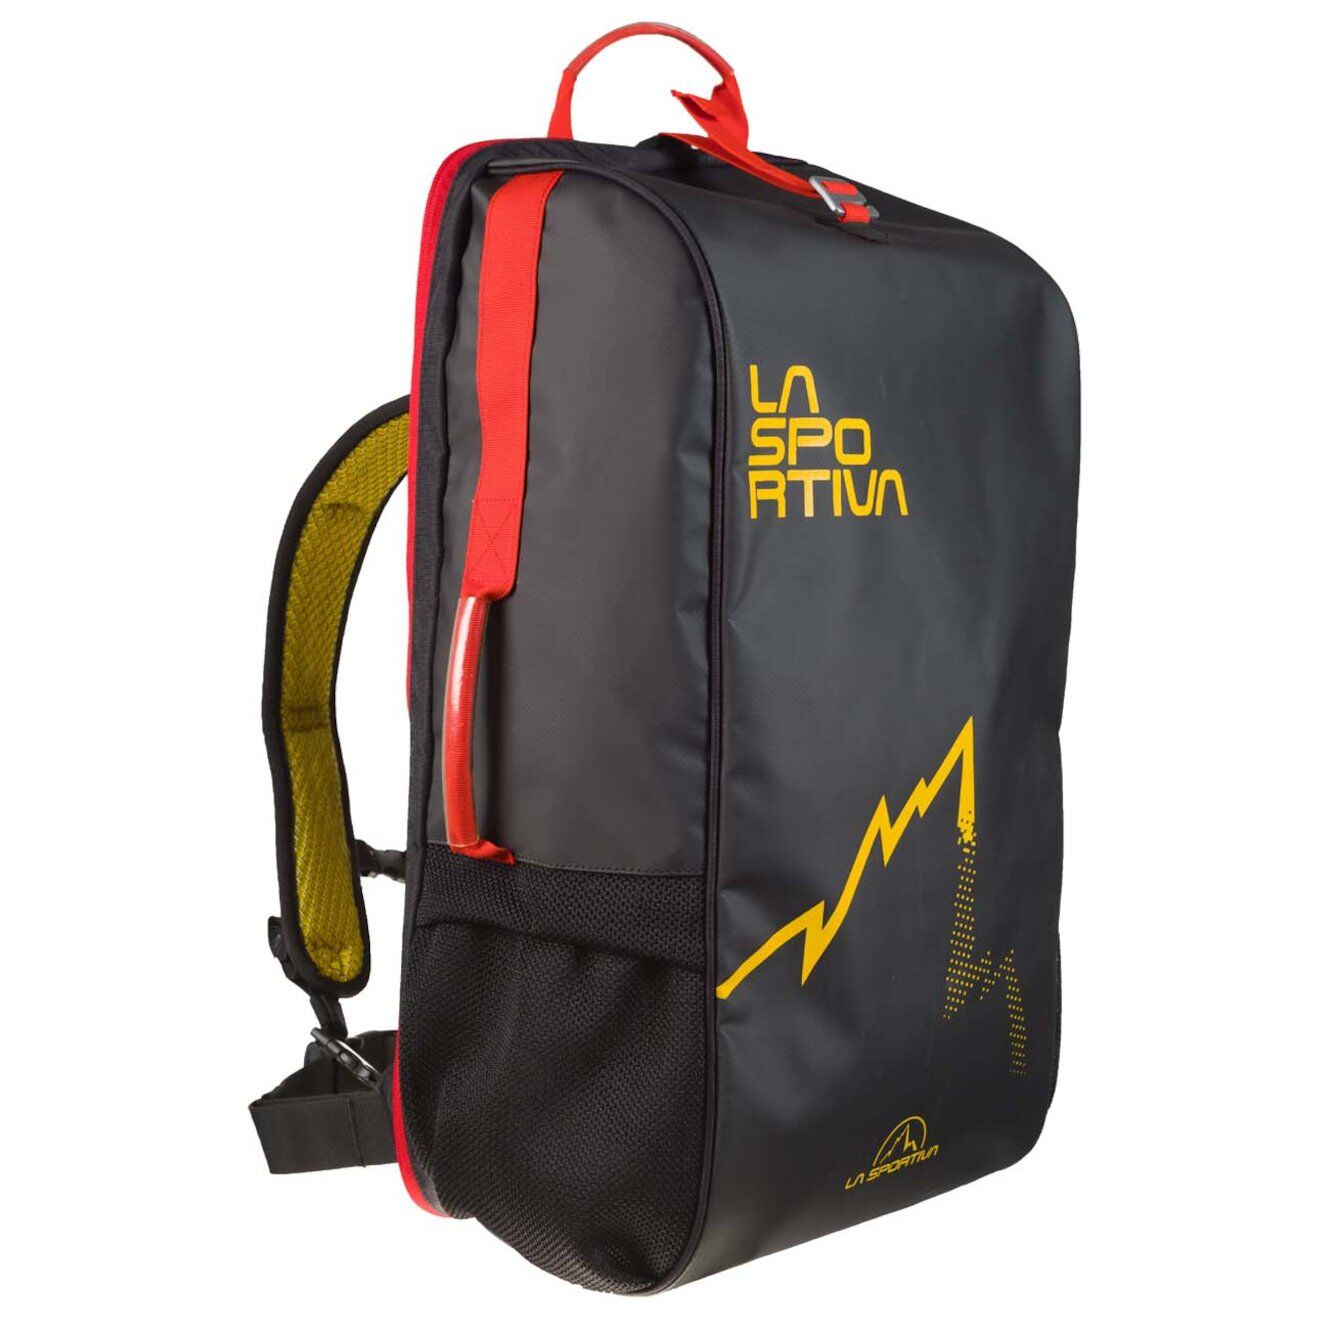 La Sportiva Travel Bag  - Mountaineering backpack